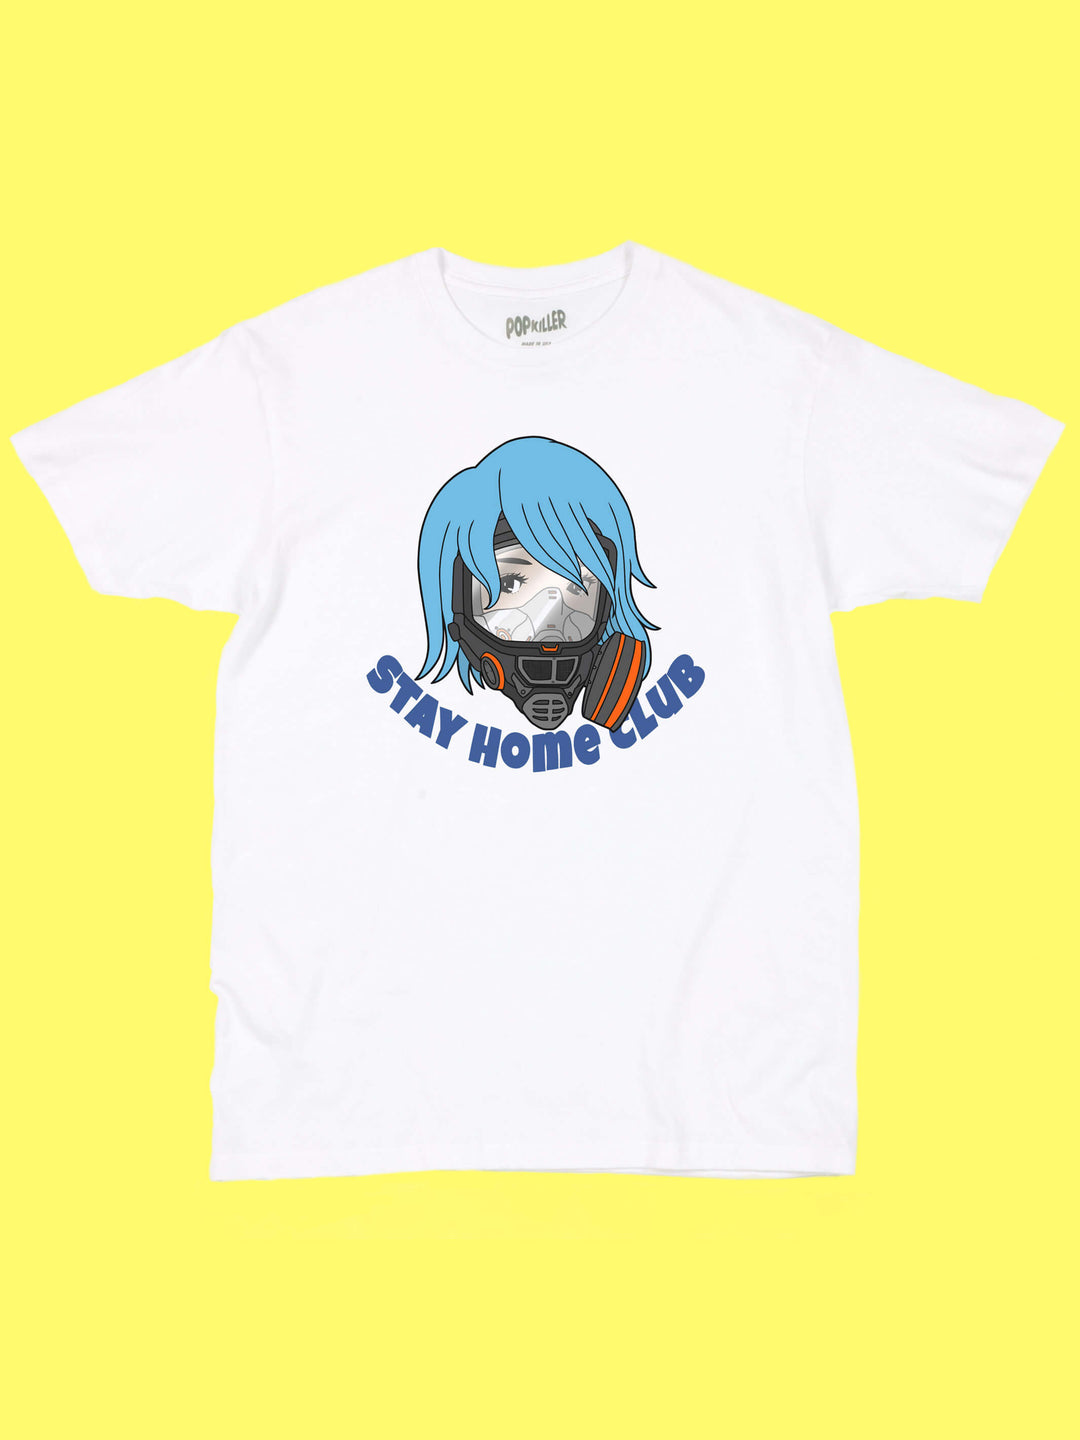 Stay home club anime graphic t-shirt.